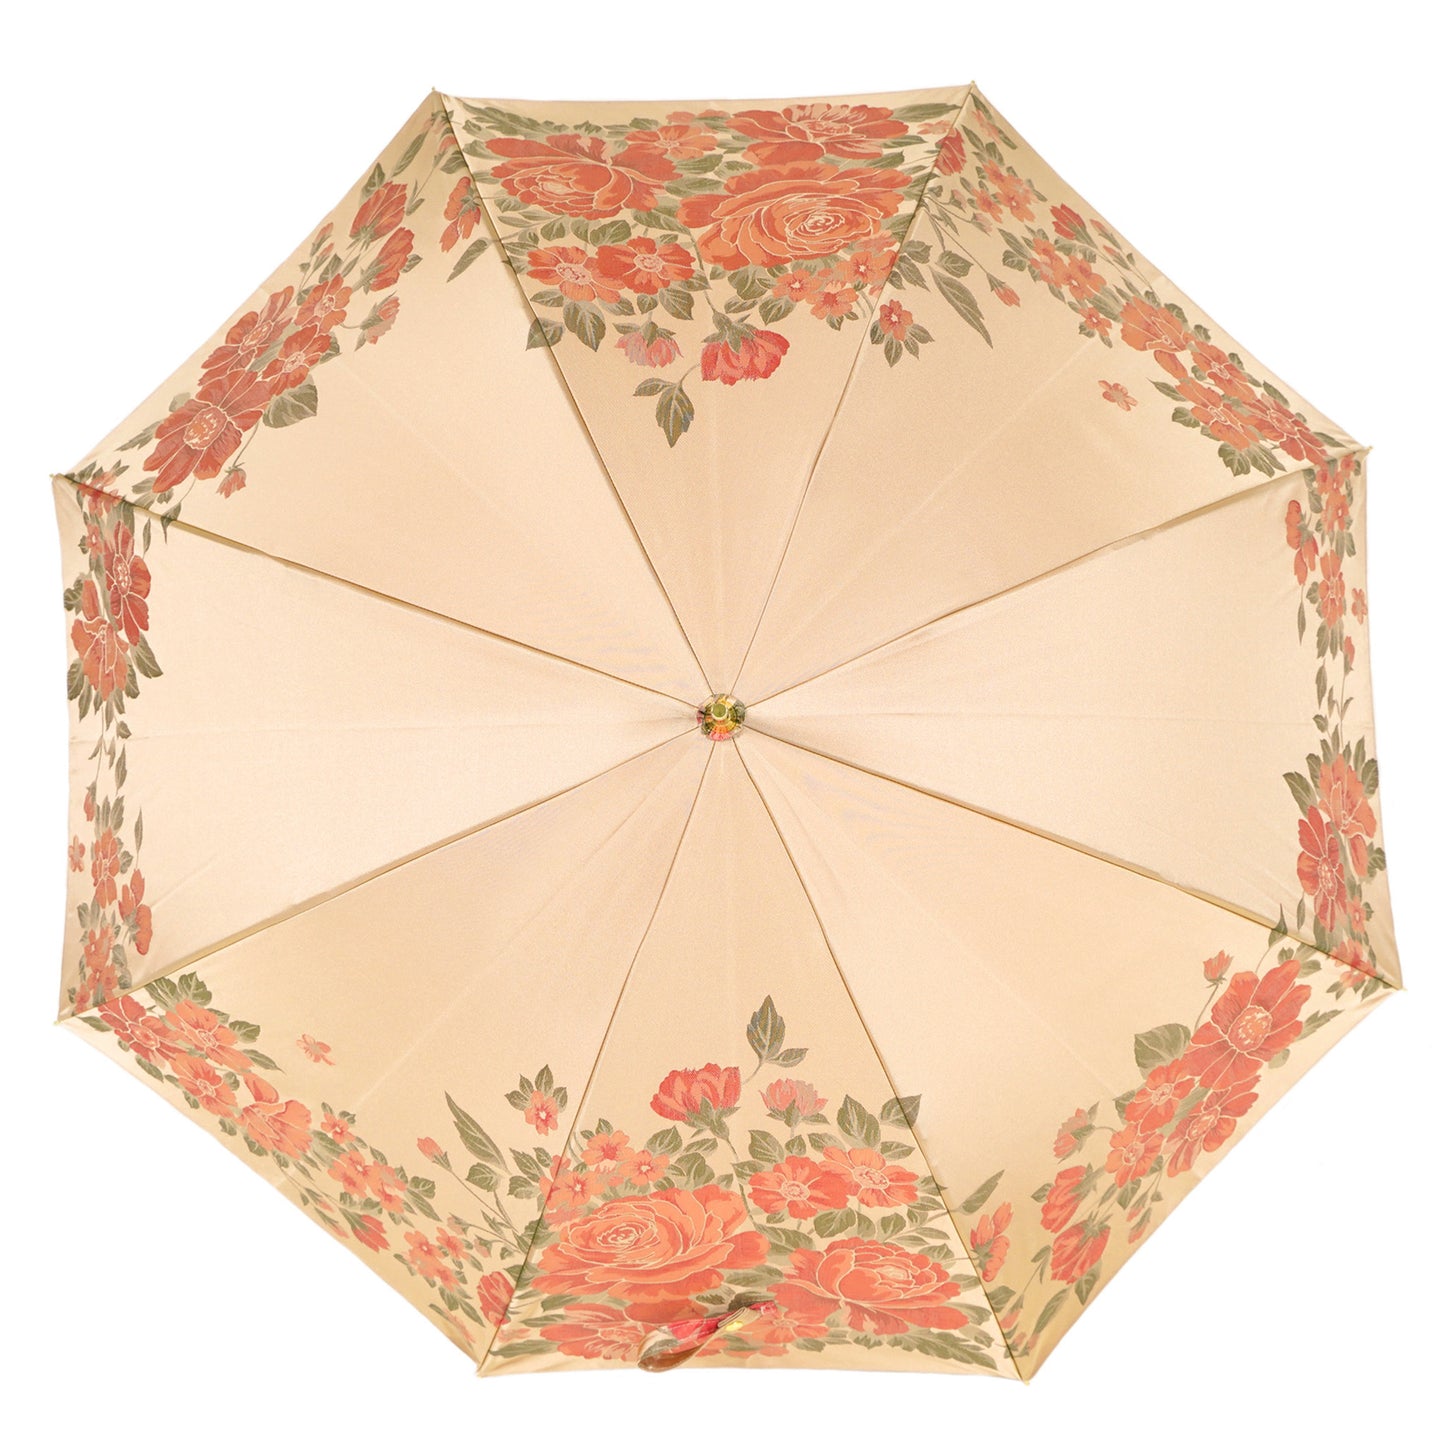 Rain & Sun Umbrella "Large Rose" - By Emotion International